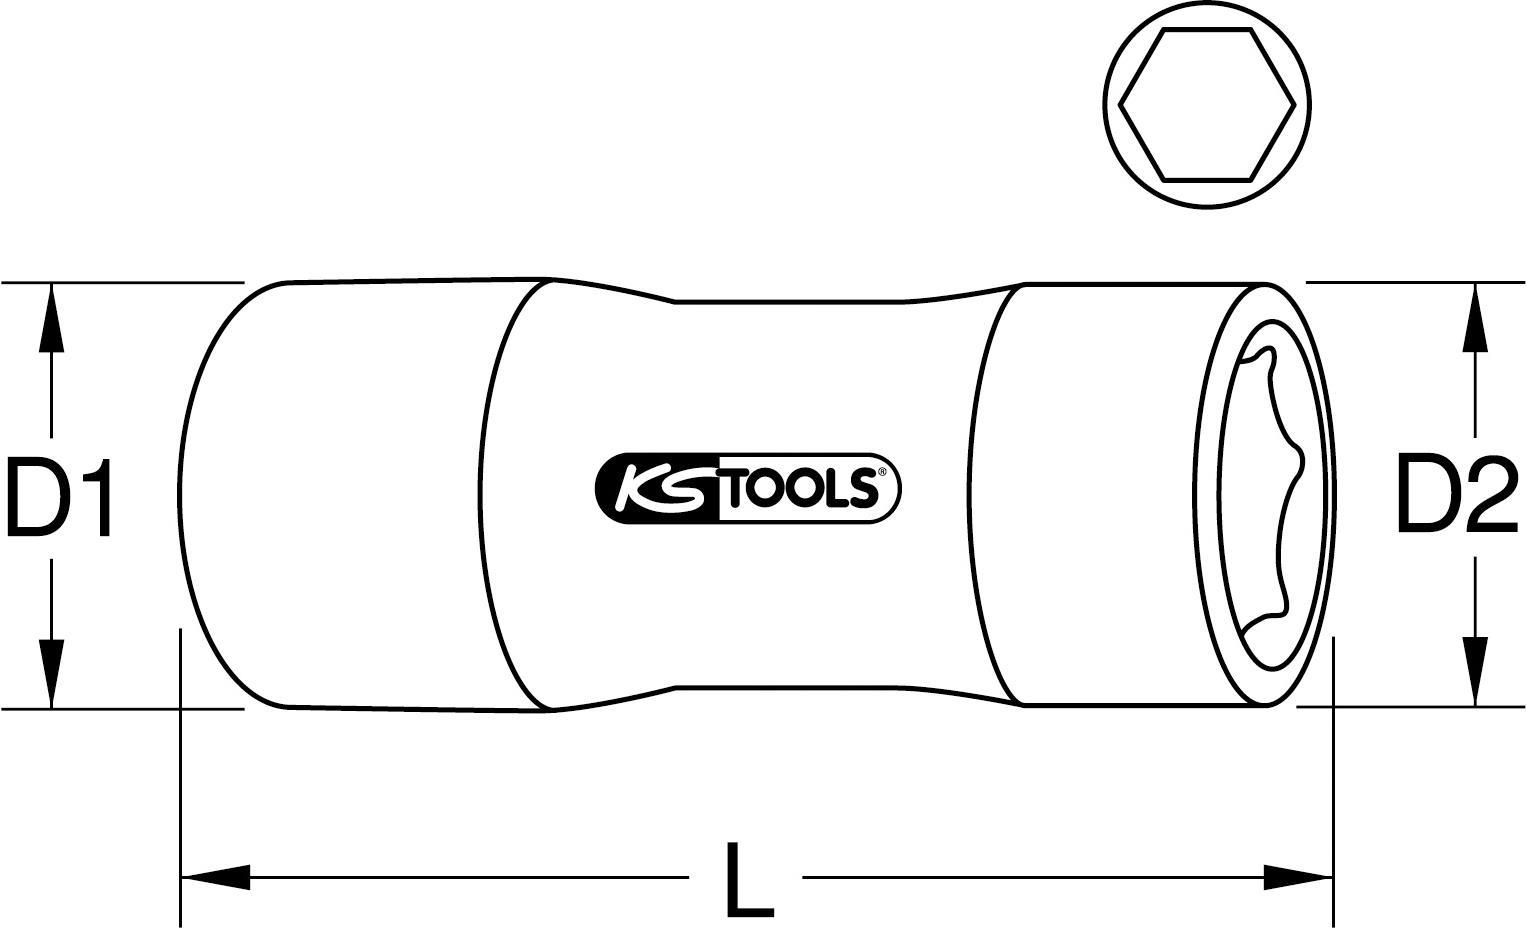 KS TOOLS Werkzeuge-Maschinen GmbH 1/4" Stecknuss mit Schutzisolierung, 8mm, lang (117.2345)